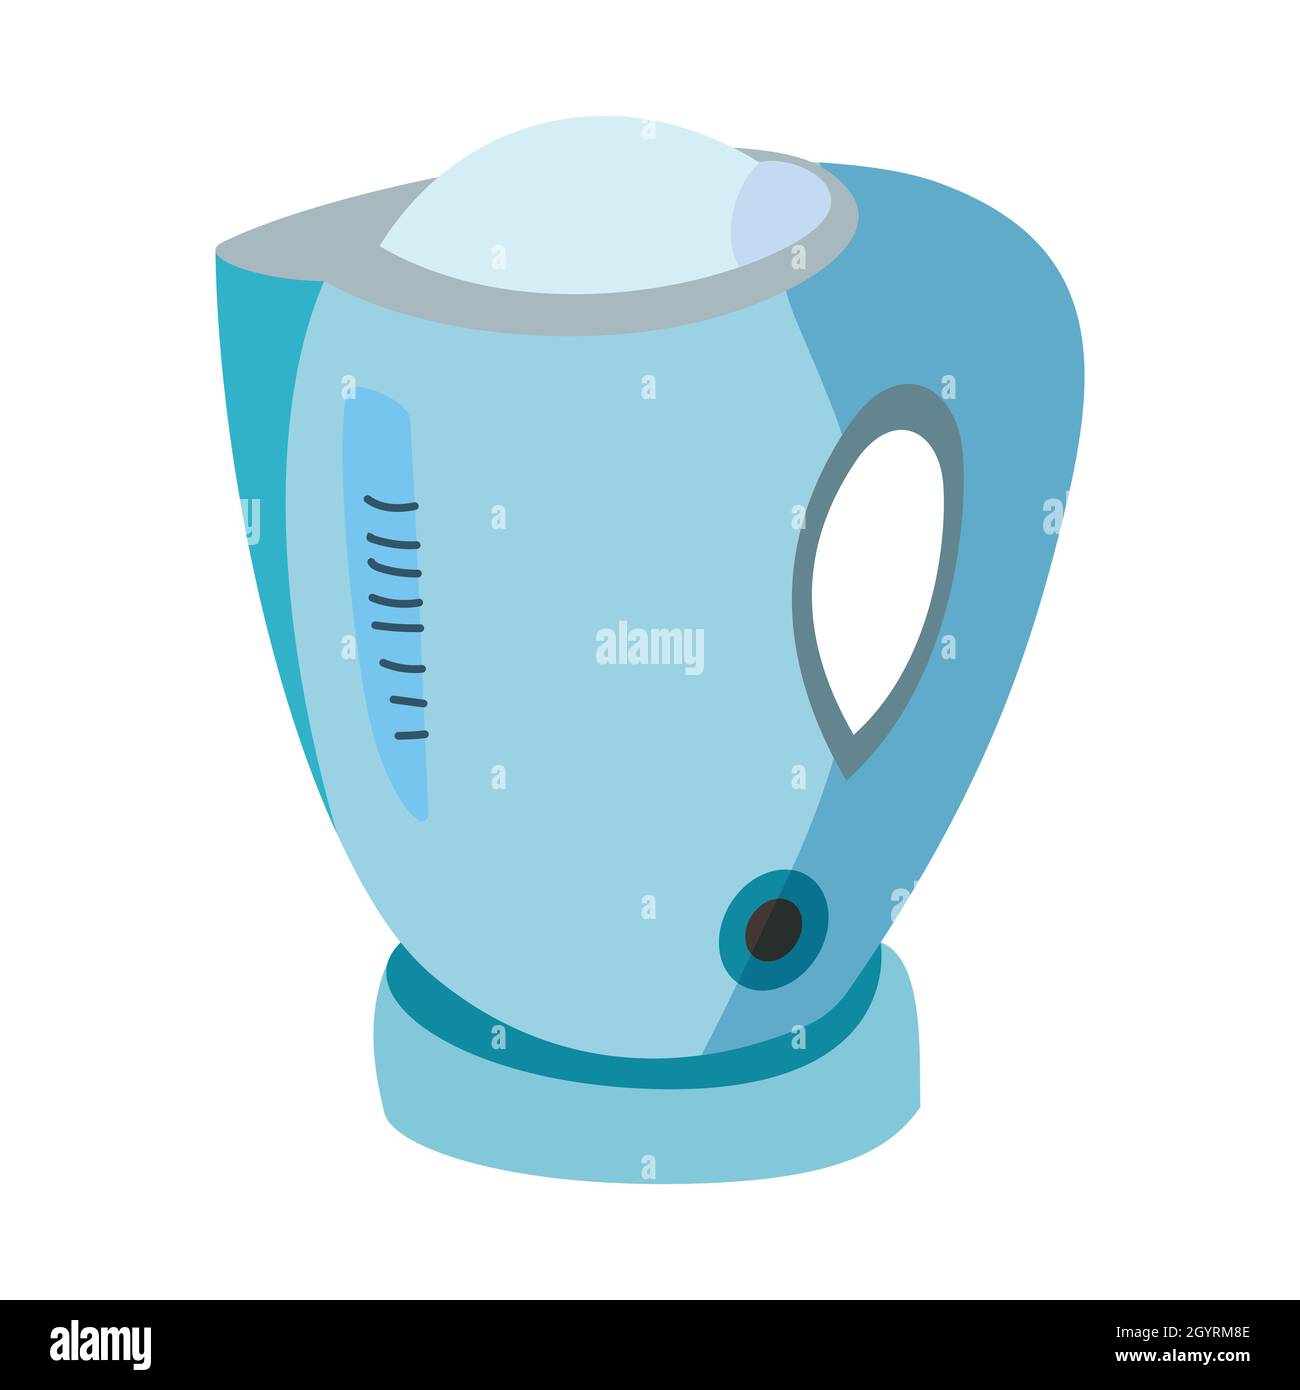 https://c8.alamy.com/comp/2GYRM8E/modern-electric-tea-kettle-or-tea-kettle-hot-vector-drawing-design-illustration-2GYRM8E.jpg